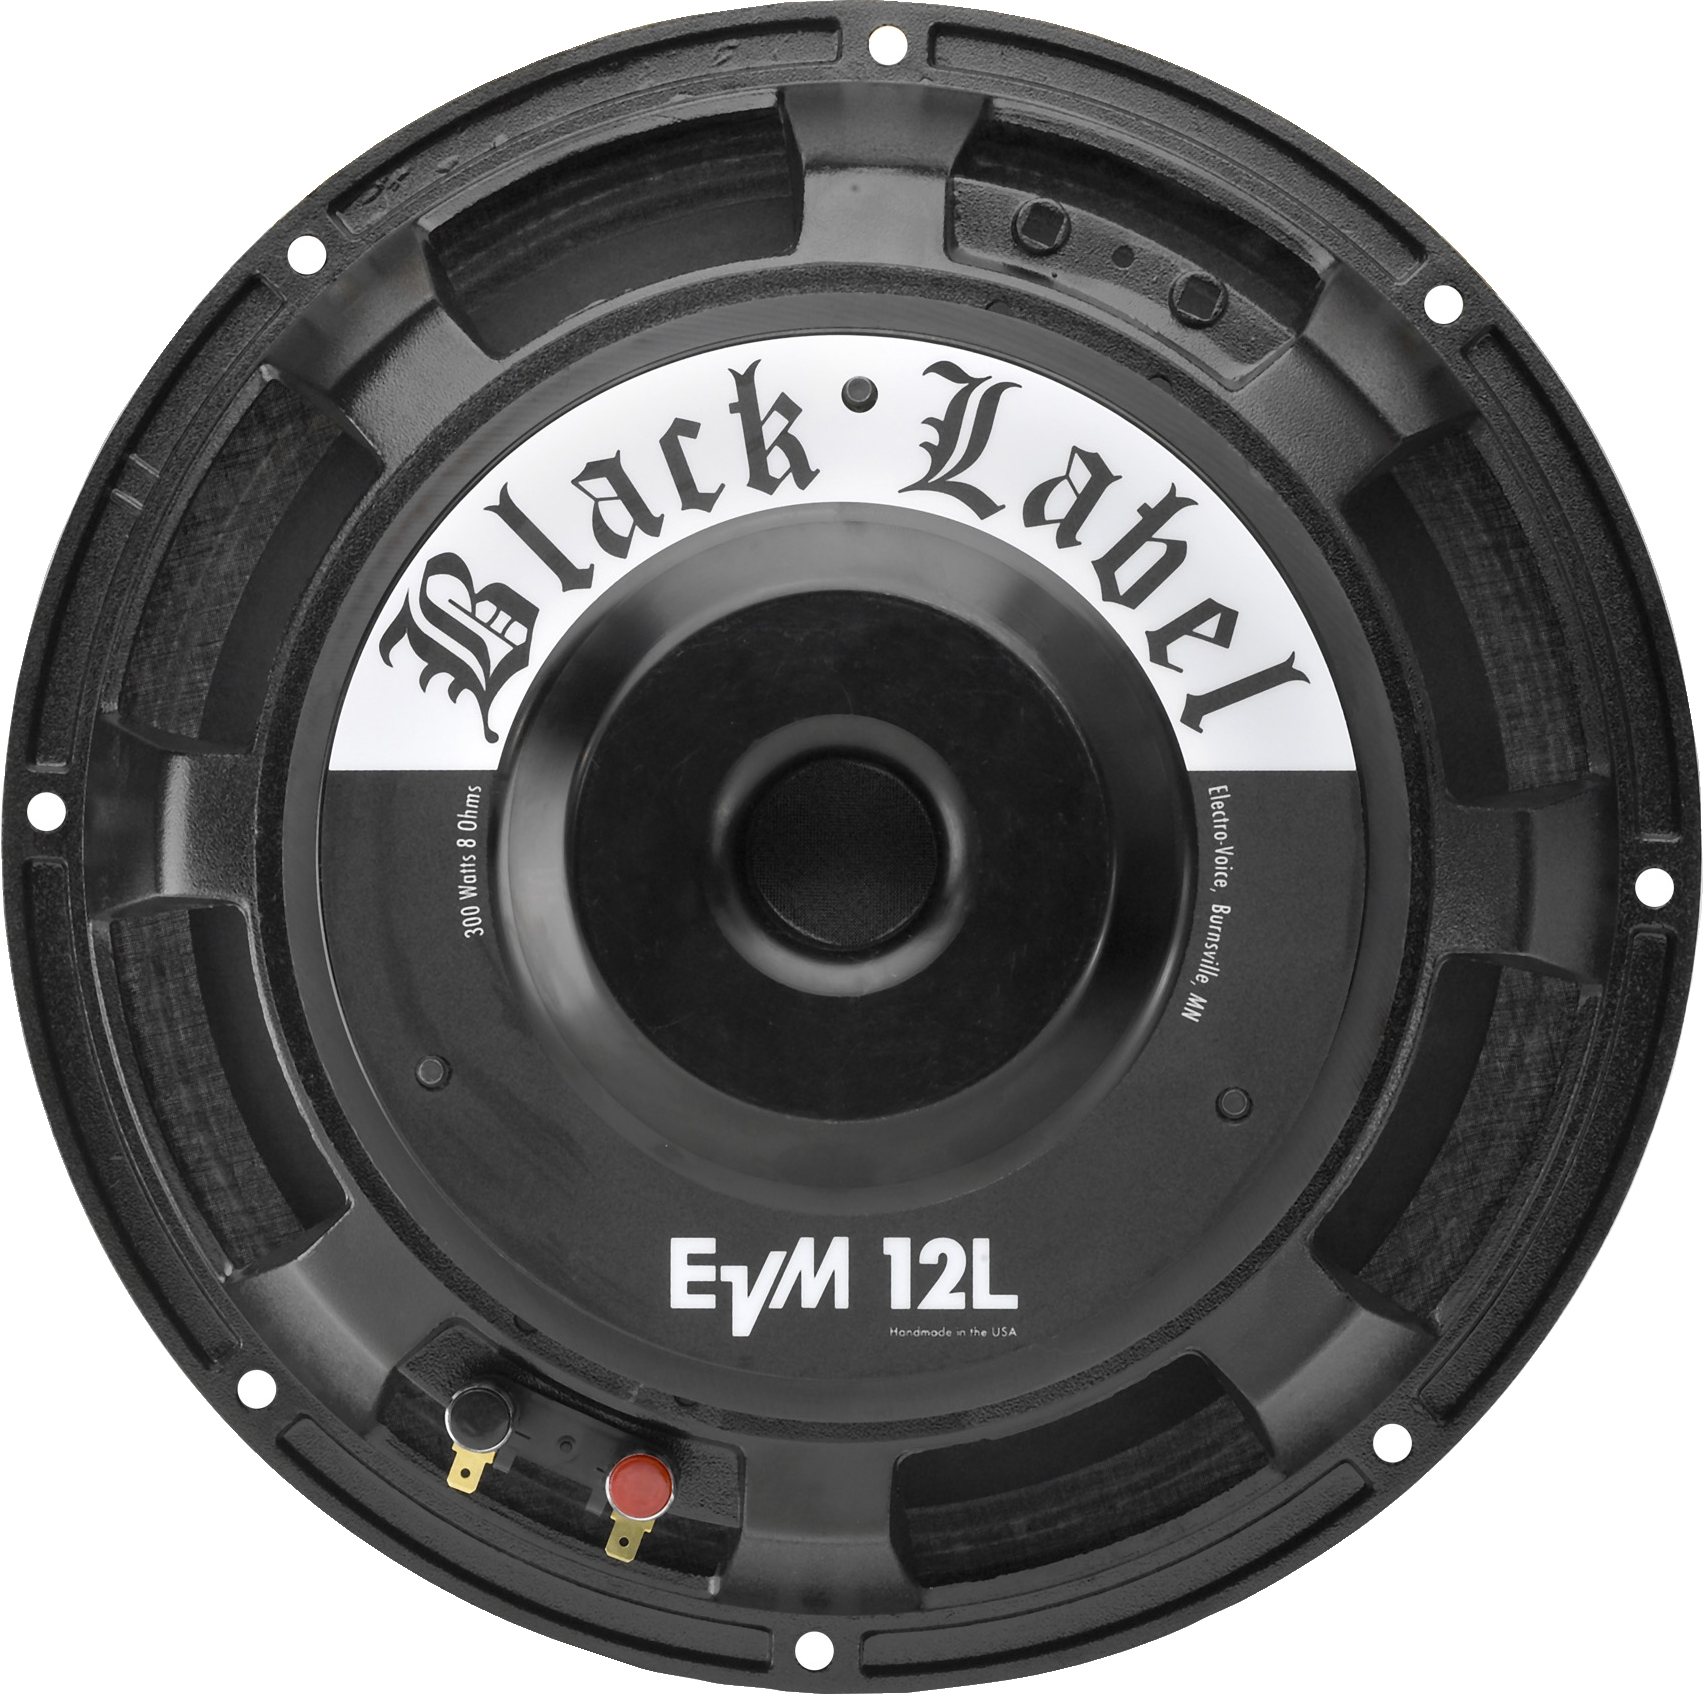 Electro-Voice Electro-Voice EVM12L Zakk Wylde Black Label Speaker, 300 W